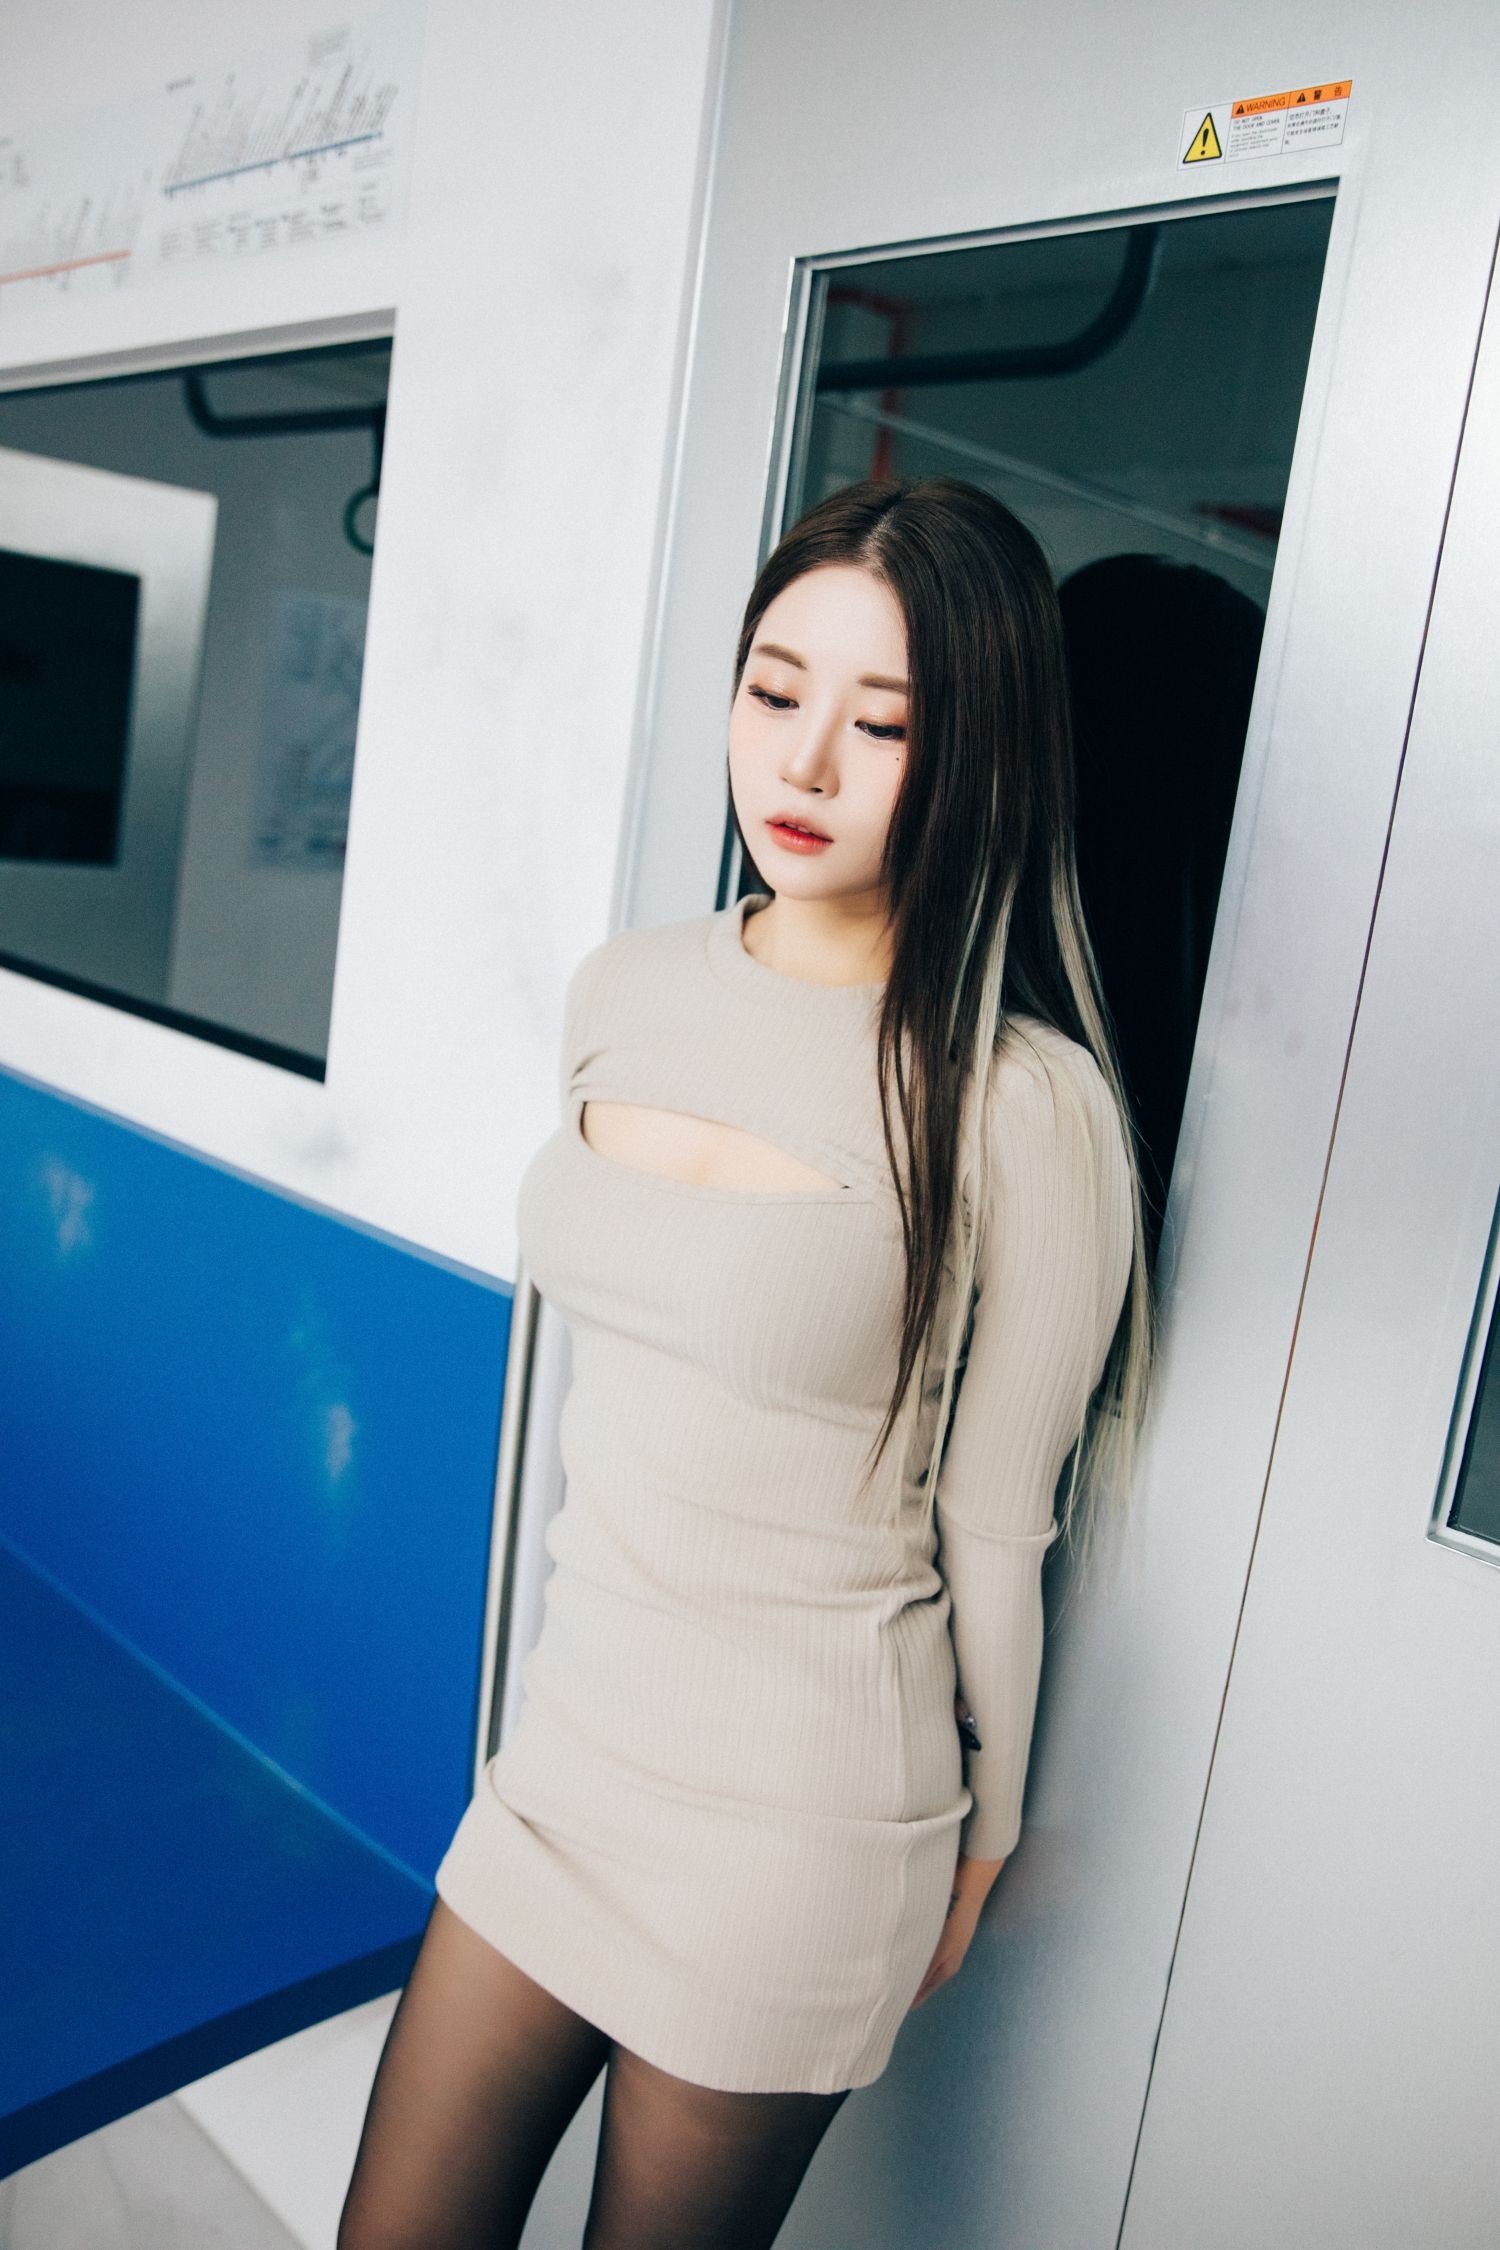 LOOZY 韩国美少女模特 Bomi 性感写真 Bondage subway (18)